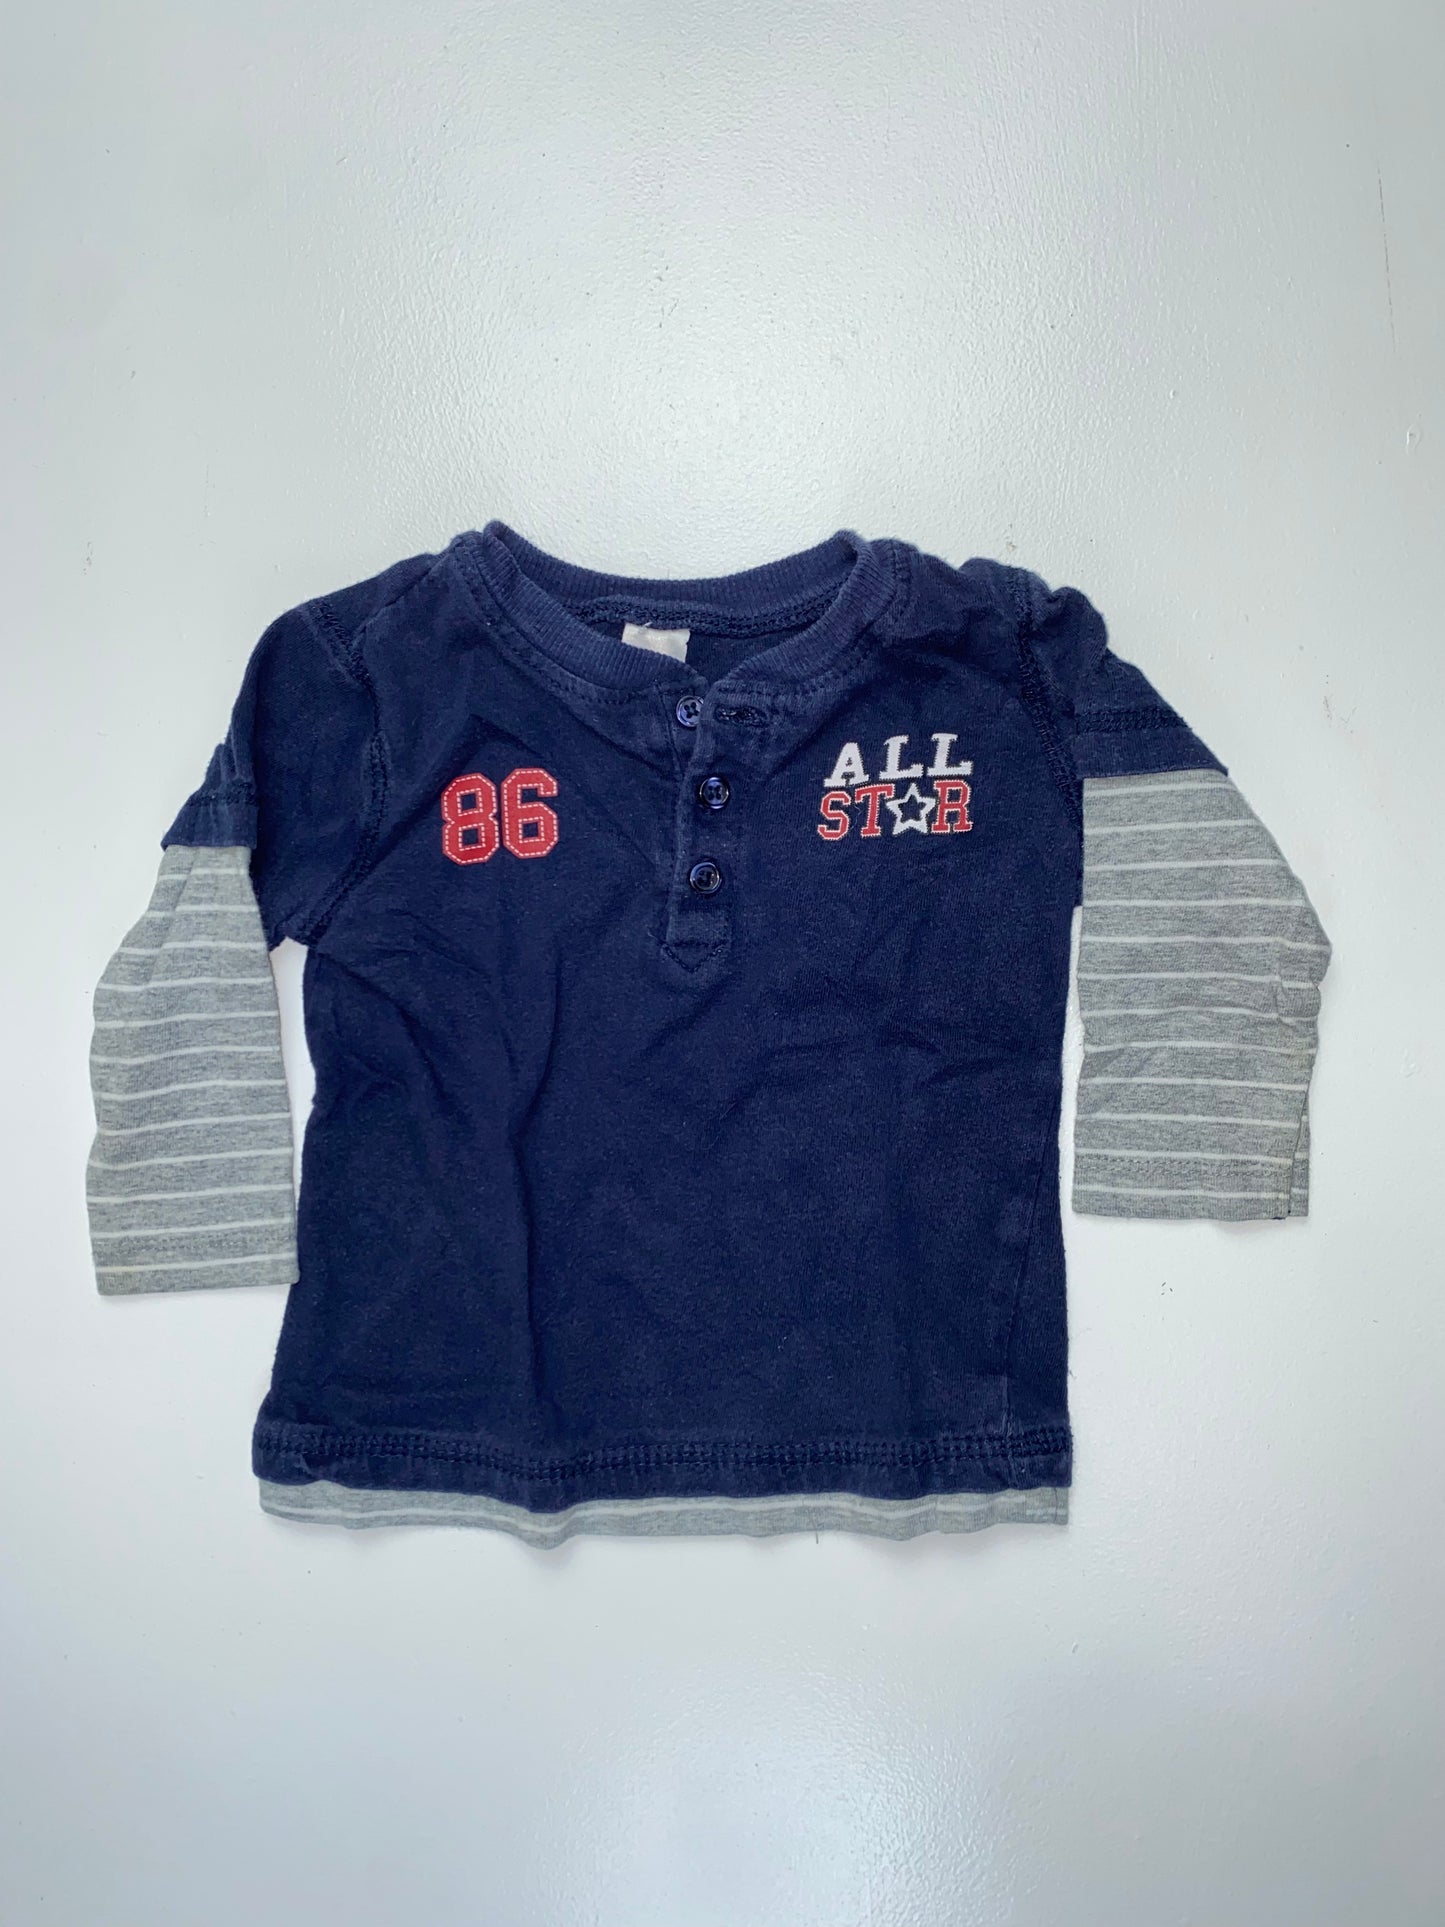 George Navy Long Sleeve Henley Shirt "All Star" 12-18M